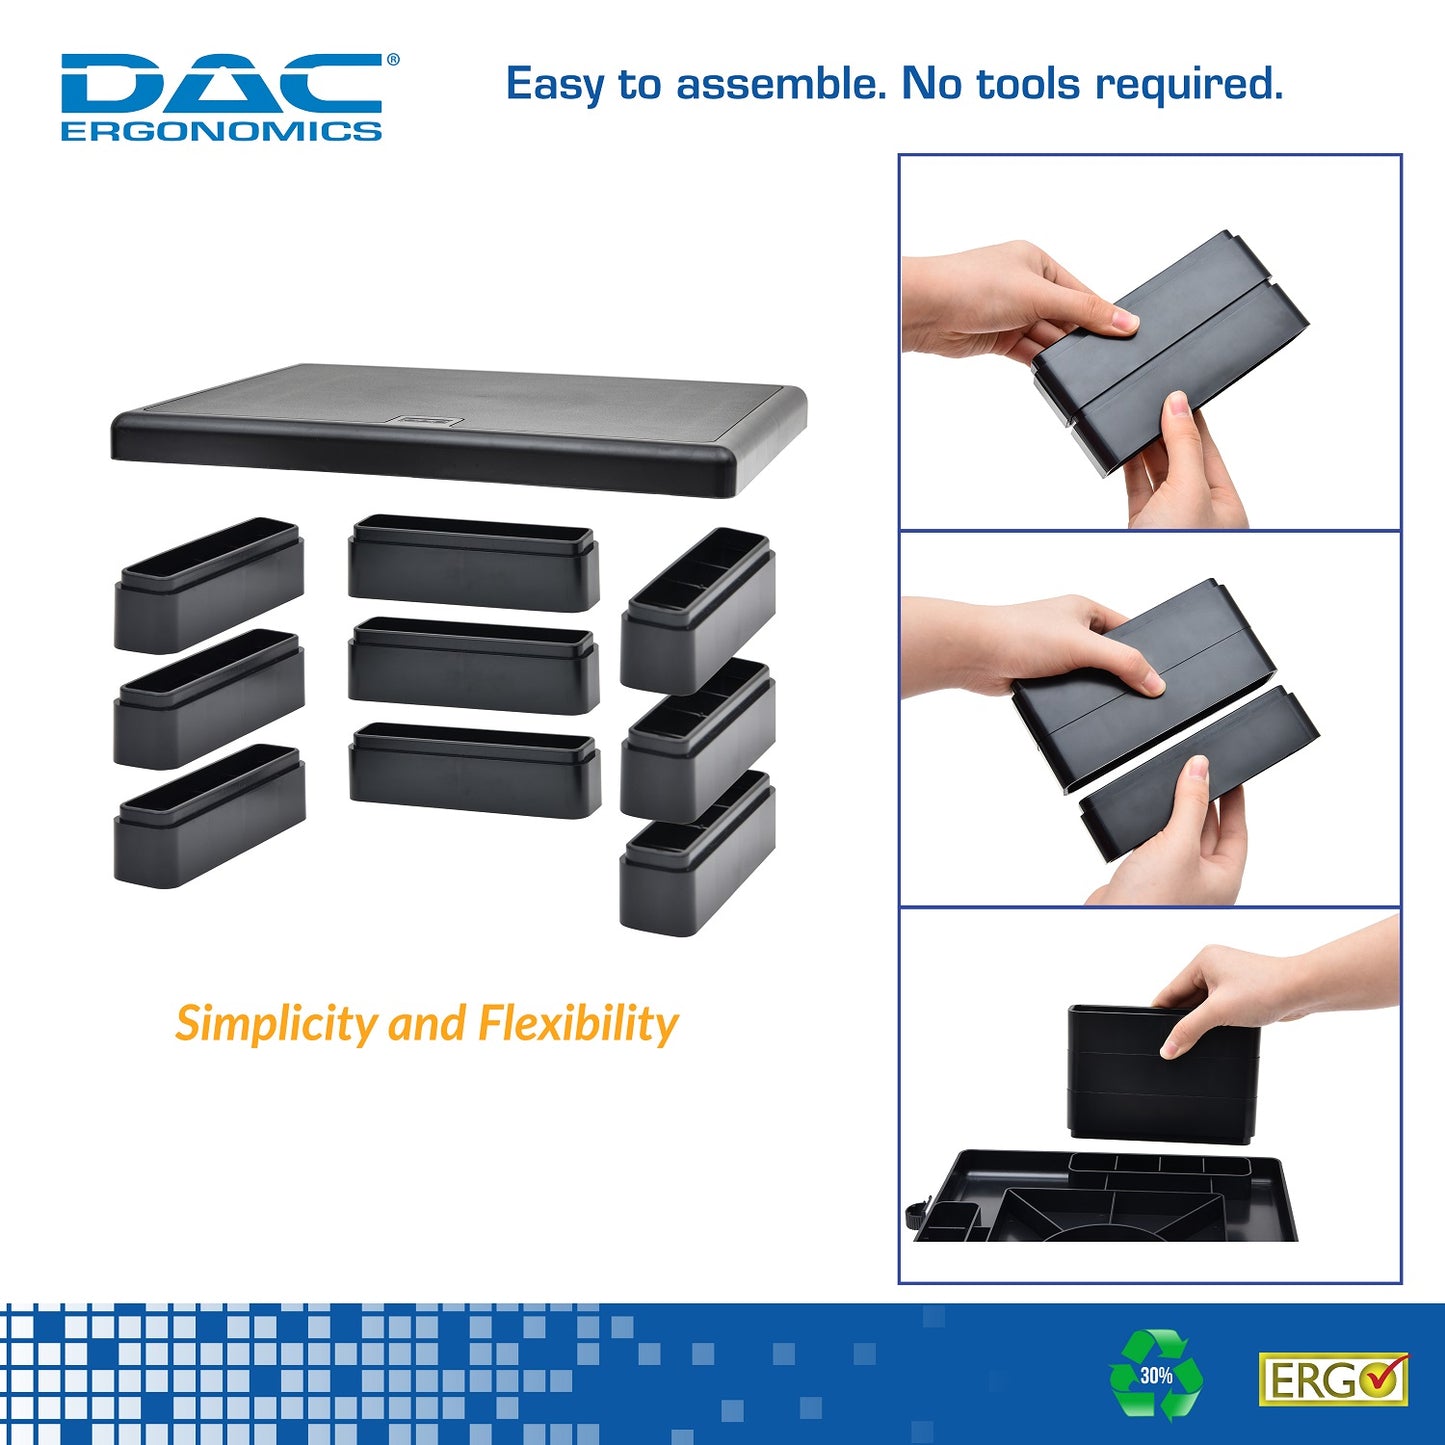 DAC® Stax™ MP-107x2 Ergonomic Height-Adjustable Monitor Riser/Laptop Stand, Black, 2 Pack